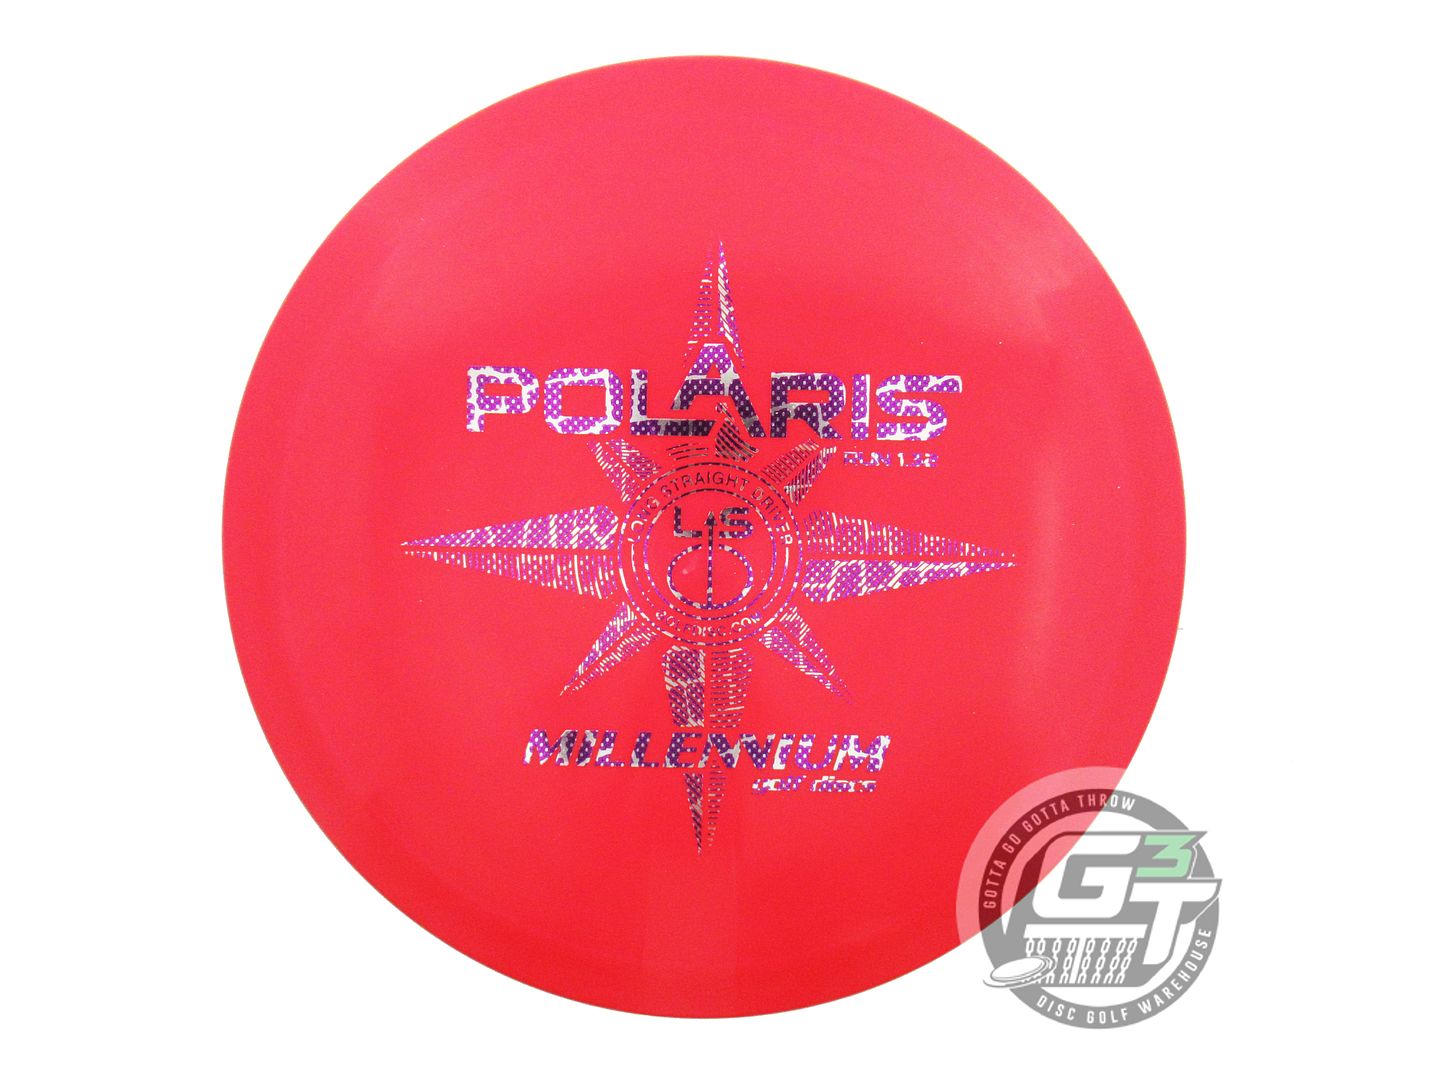 Millennium Standard Polaris LS Fairway Driver Golf Disc (Individually Listed)